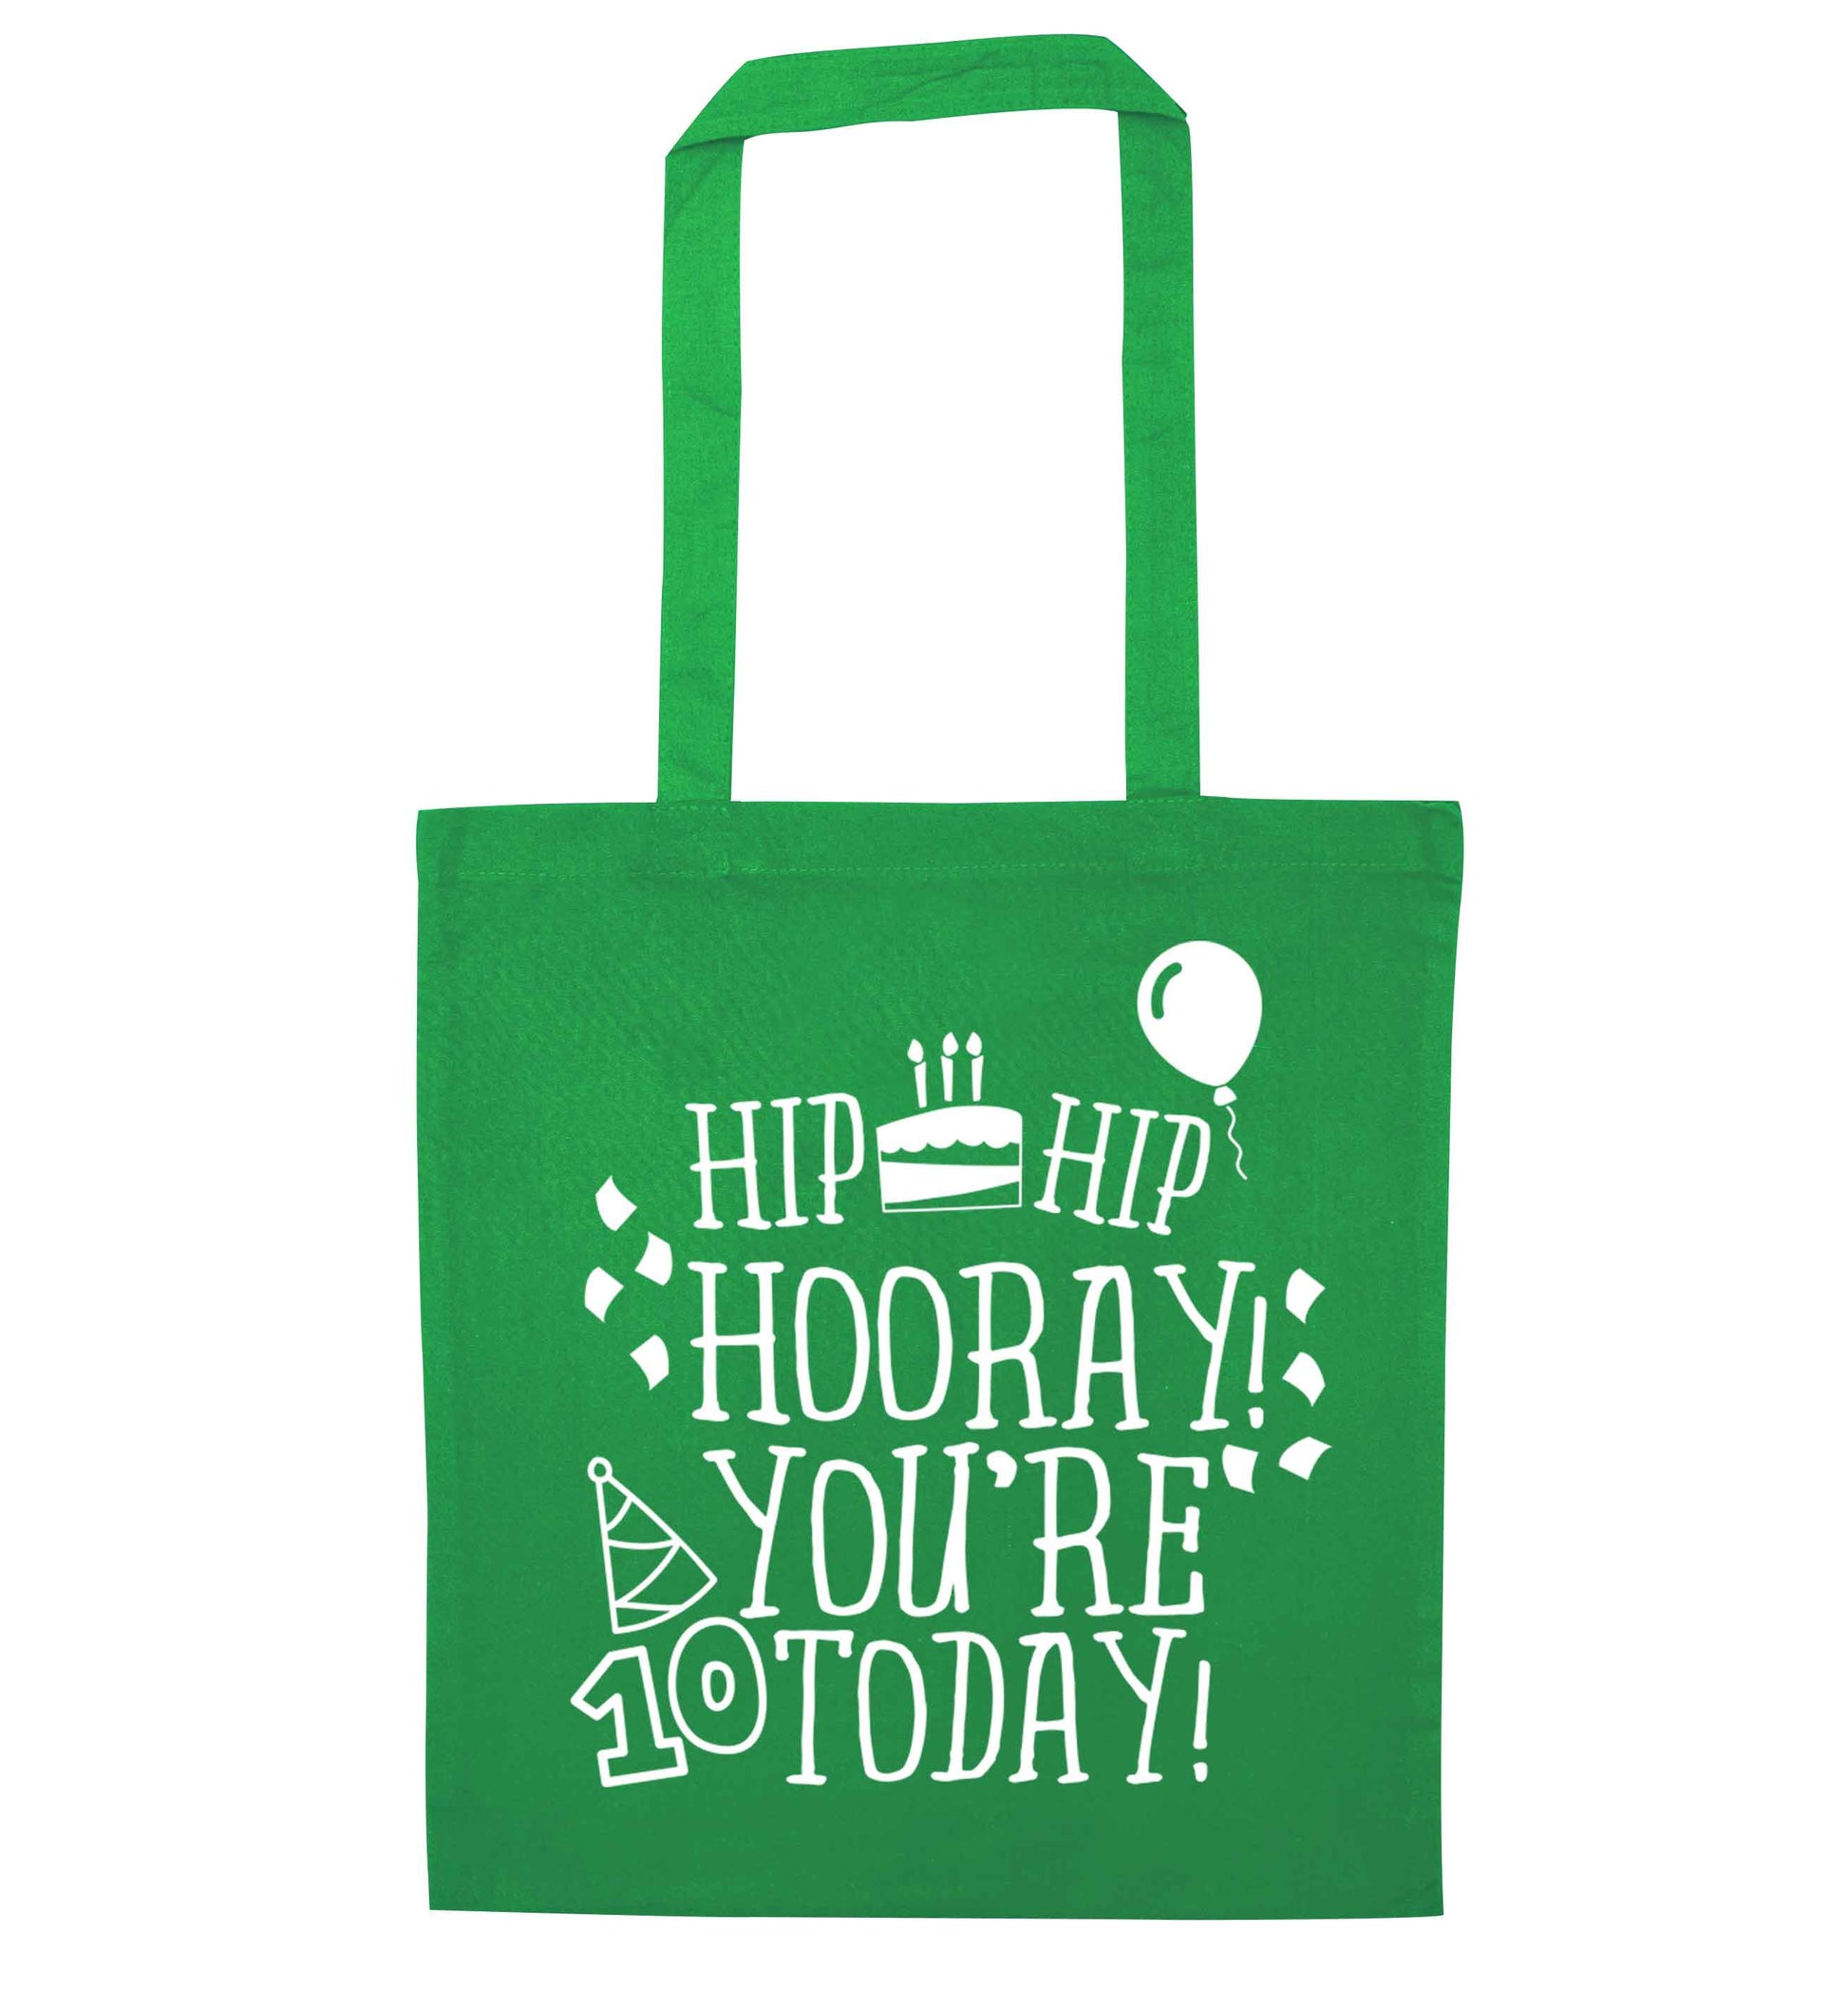 Hip hip hooray you're ten today! green tote bag